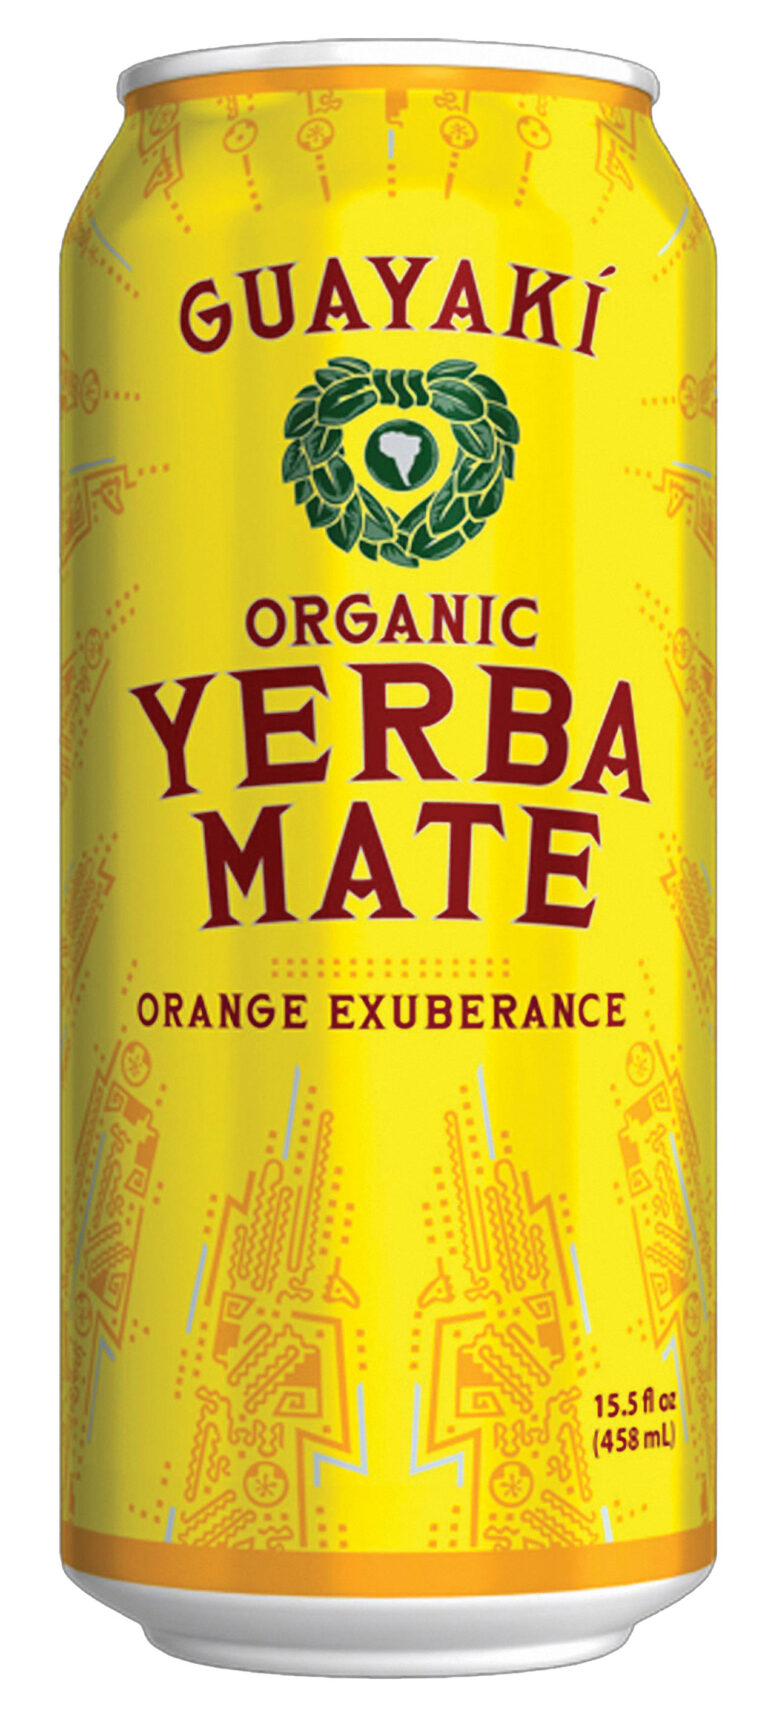 Can of yerba mate.